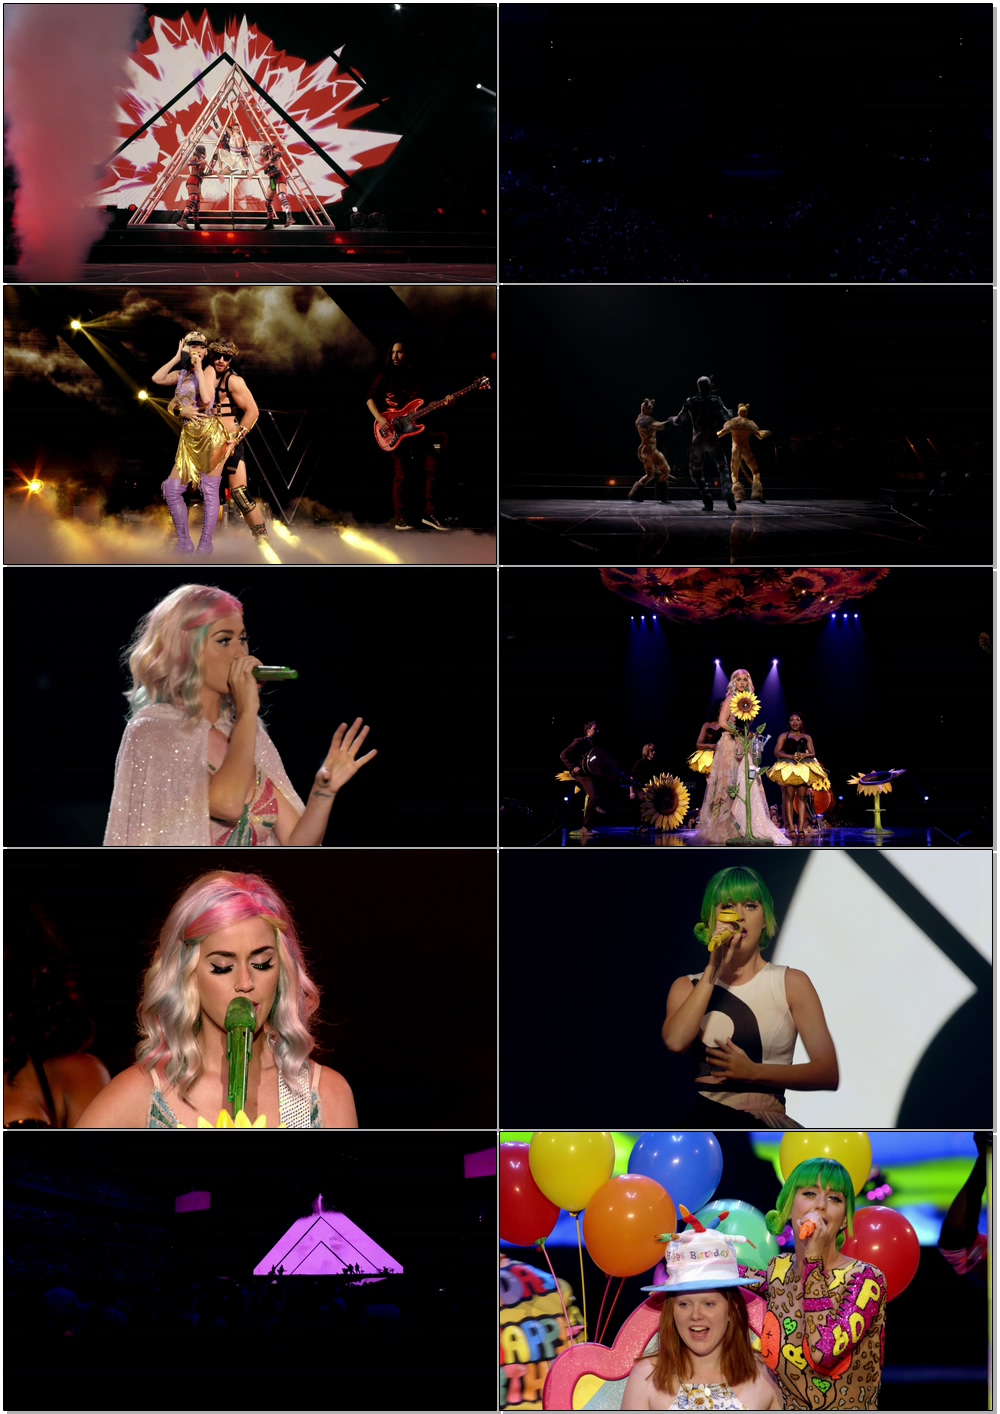 Katy Perry 凯蒂·佩里 – The Prismatic World Tour 棱镜世界巡回演唱会 (2015) 1080P蓝光原盘 [BDMV 44.2G]Blu-ray、欧美演唱会、蓝光演唱会4